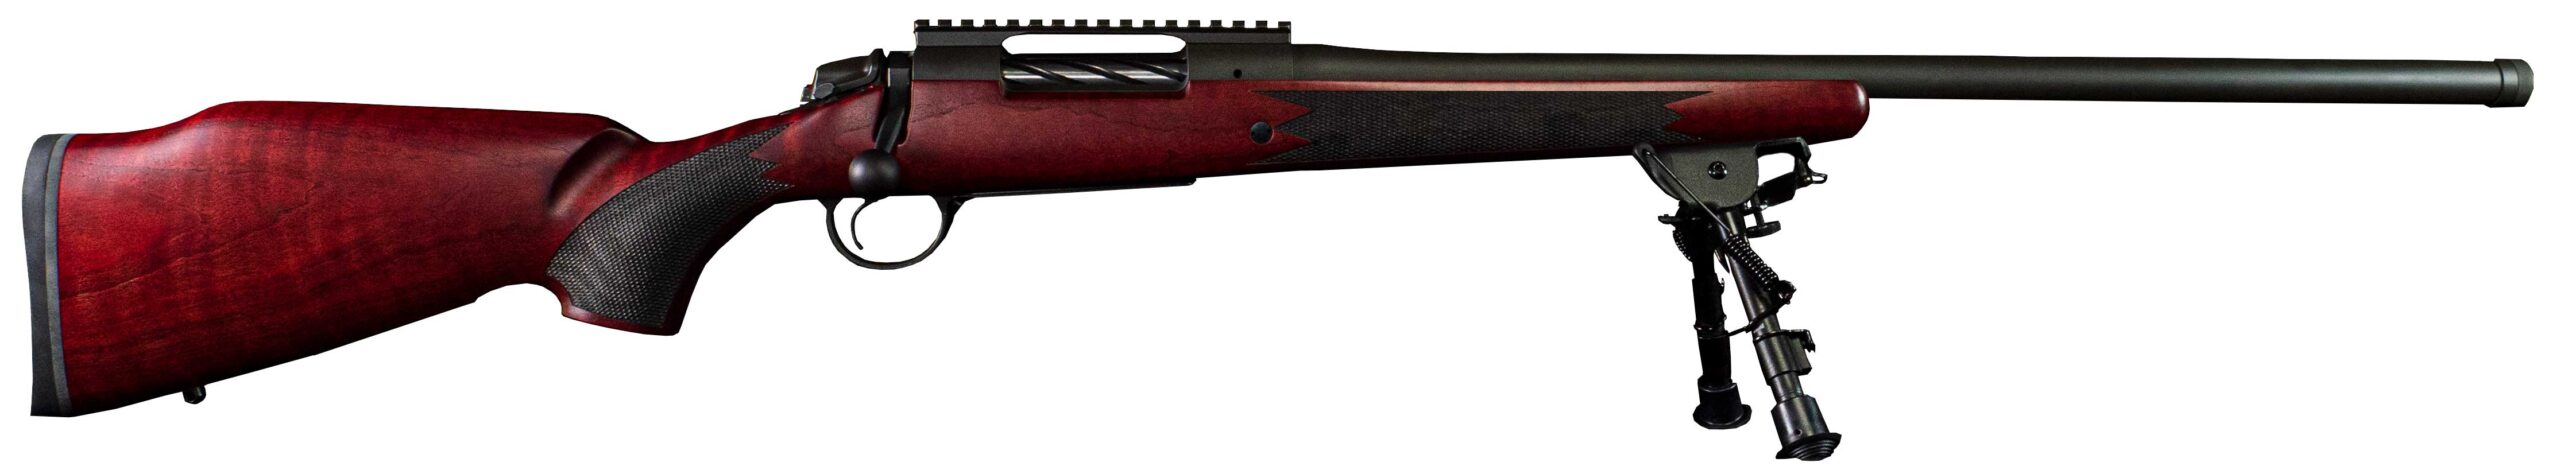 bergara-limited-edition-reserva-rifle-375h&amph